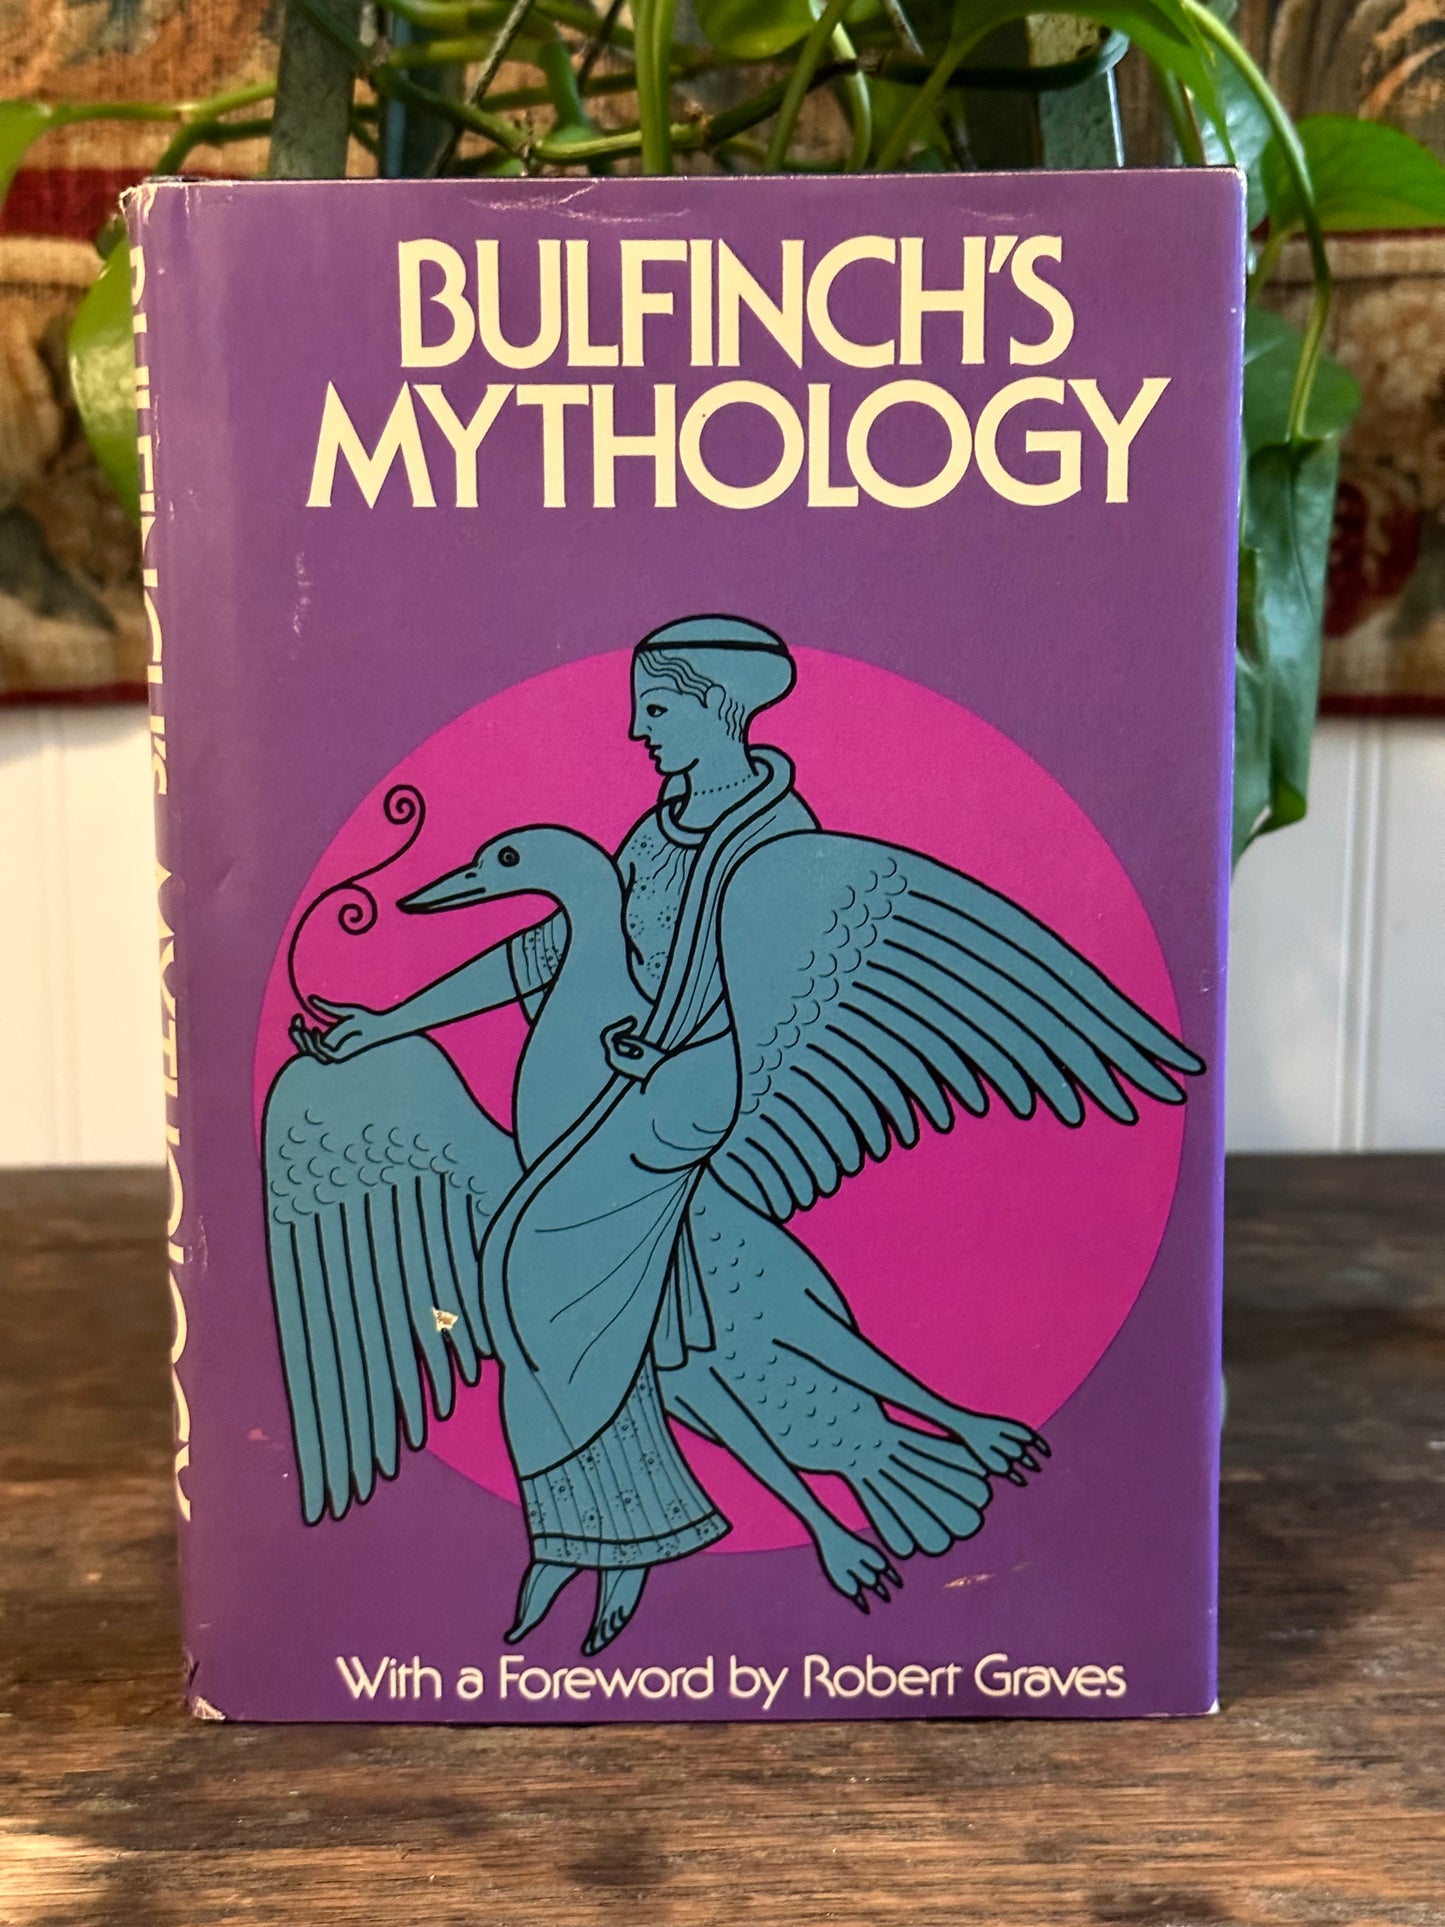 Bulfinch’s Mythology by Robert Graves